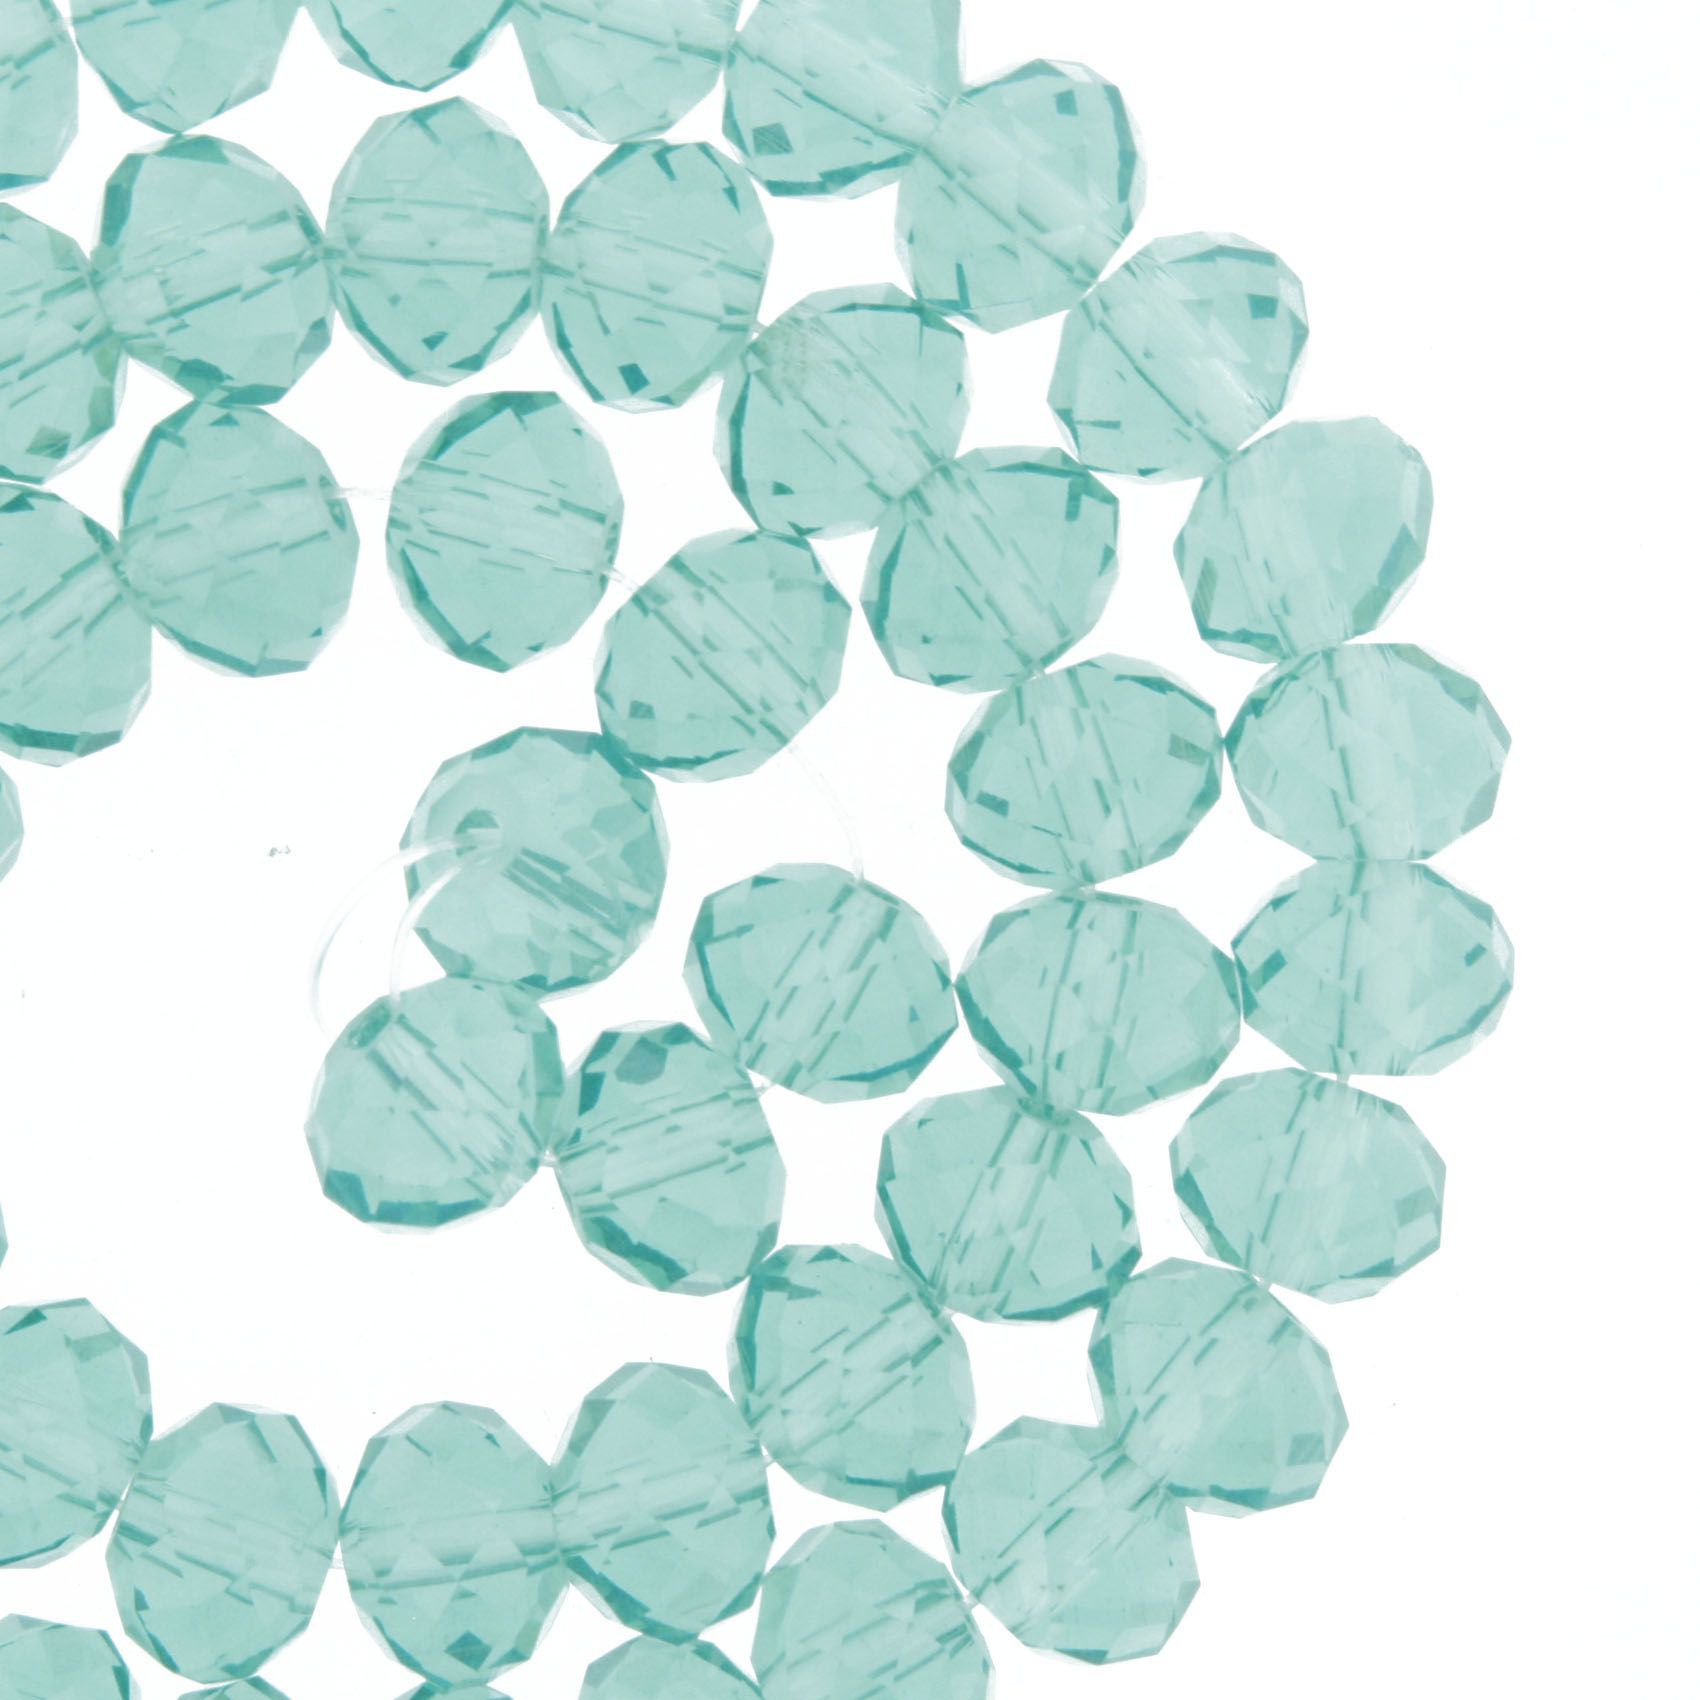 Fio de Cristal - Flat® - Aquamarine - 8mm - Stéphanie Bijoux® - Peças para Bijuterias e Artesanato